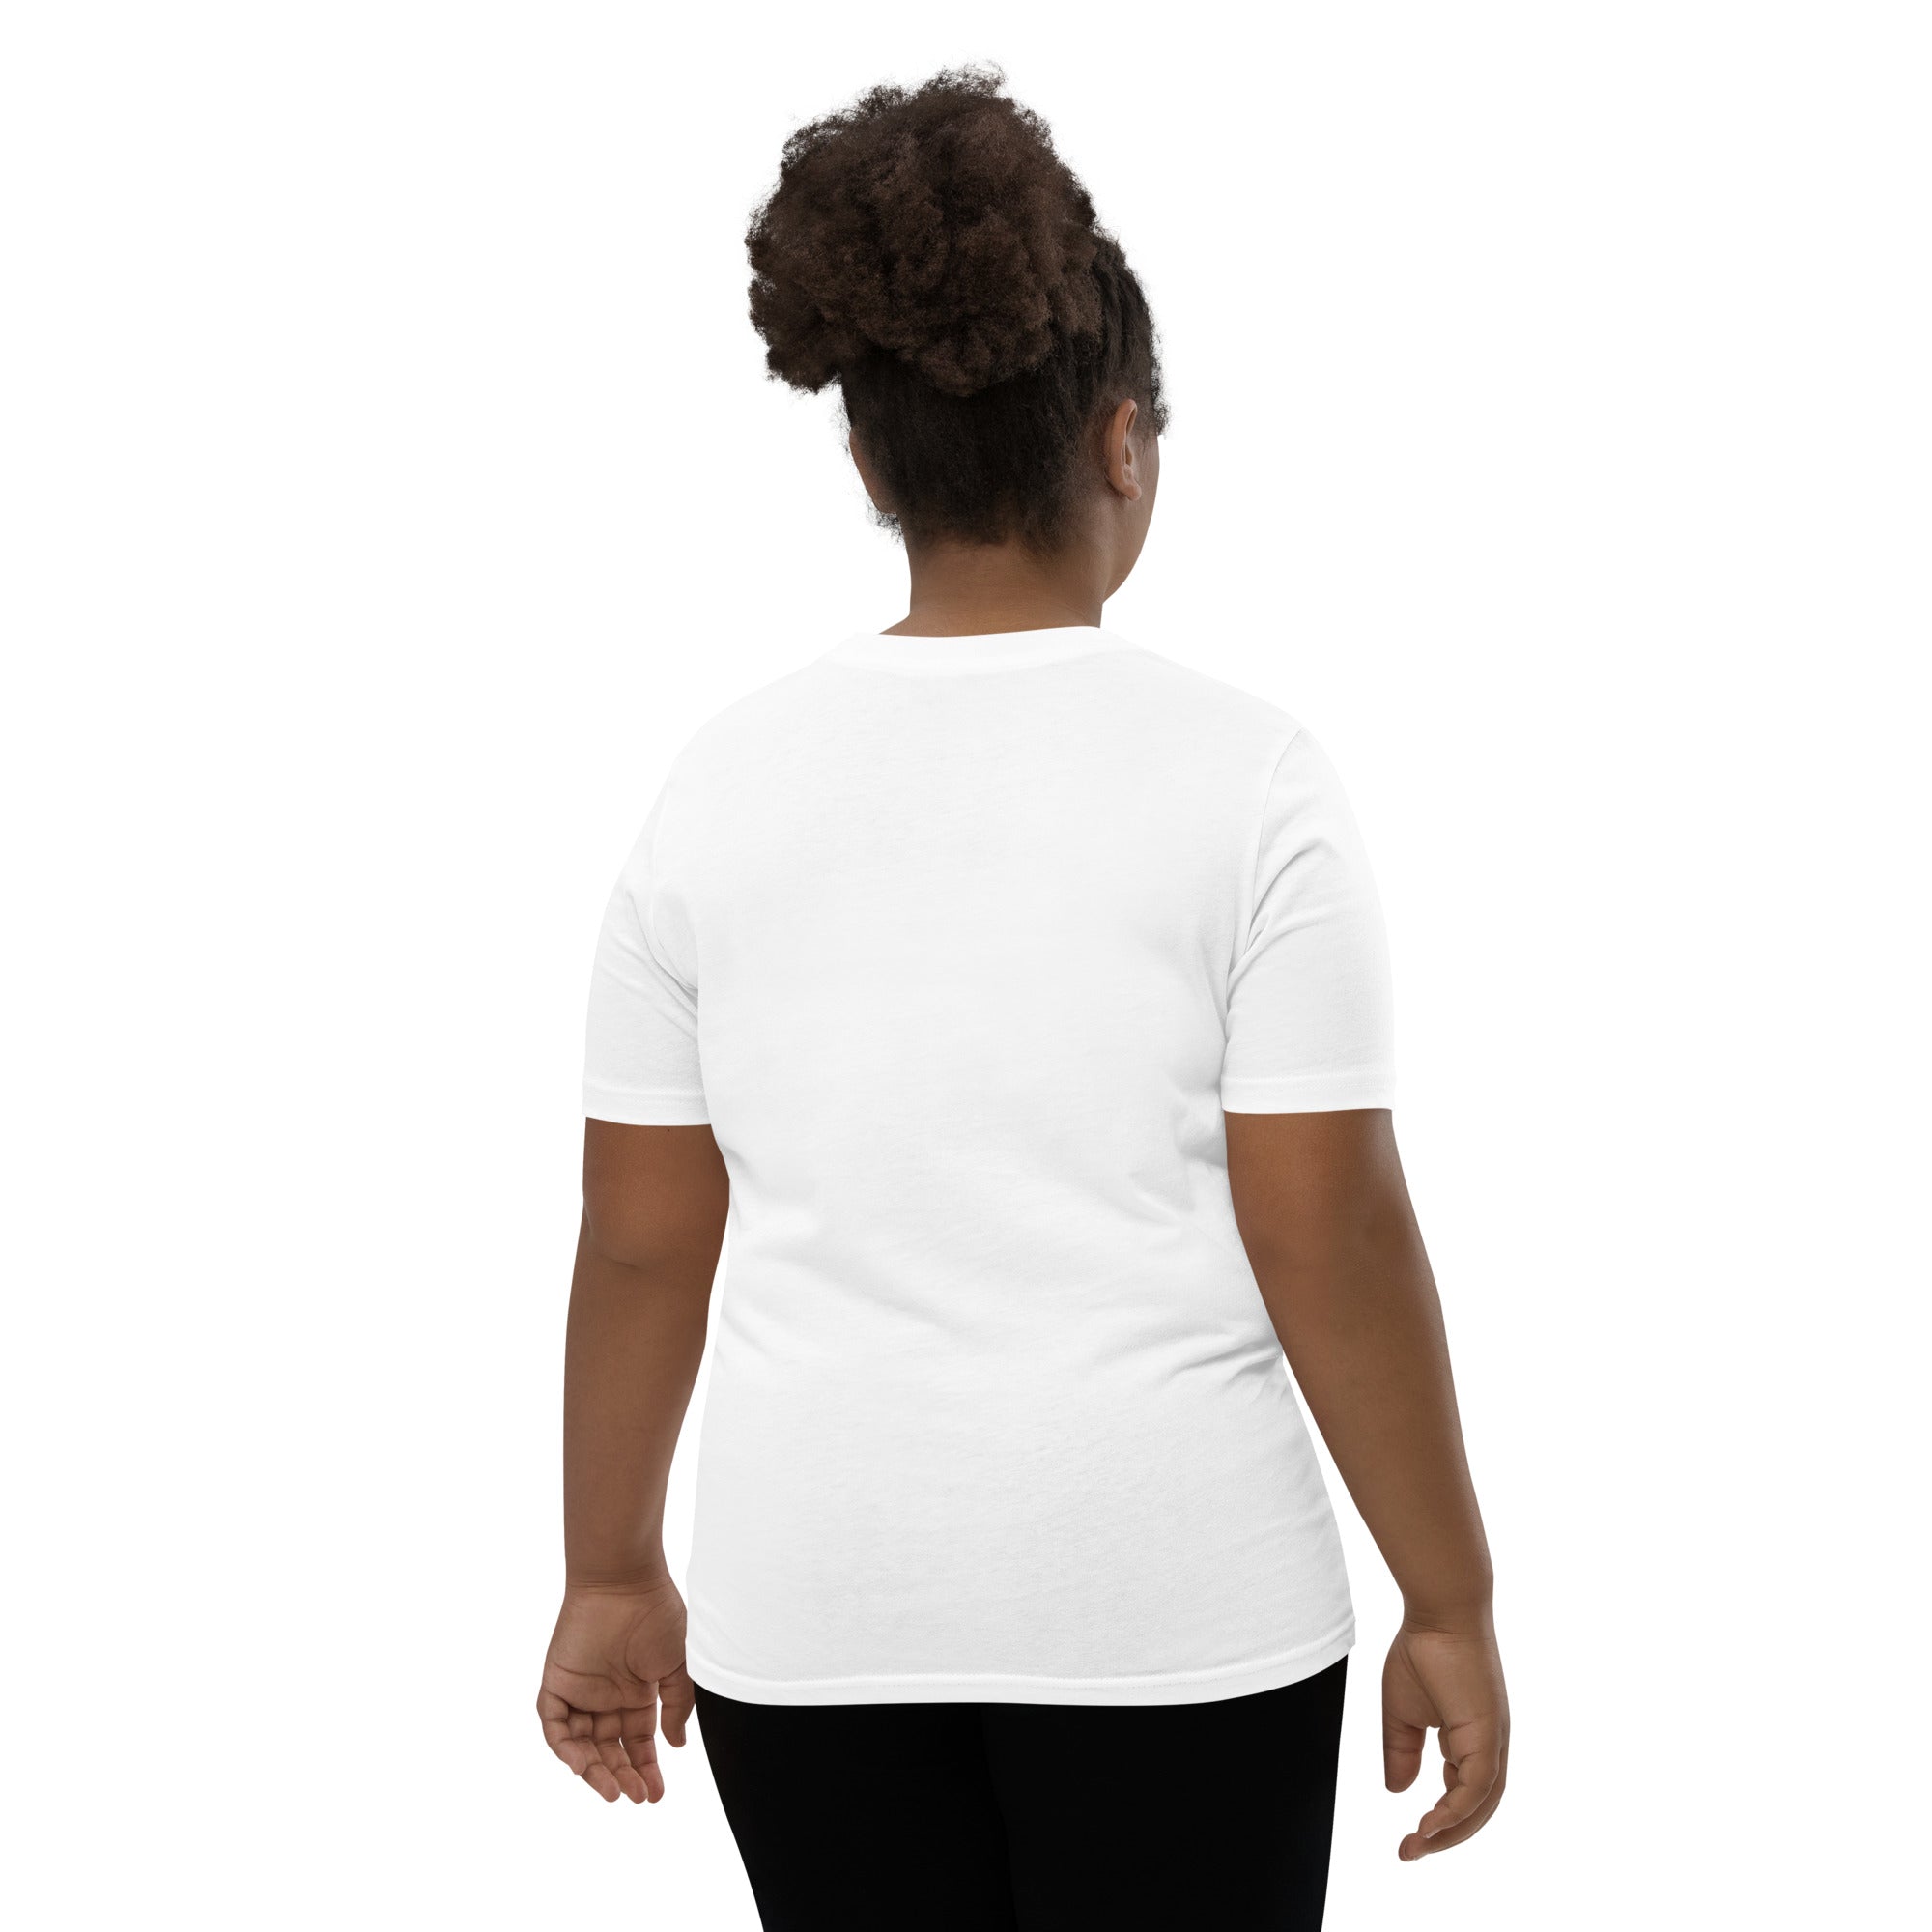 Weston Logo R/B - White Youth Short Sleeve T-Shirt